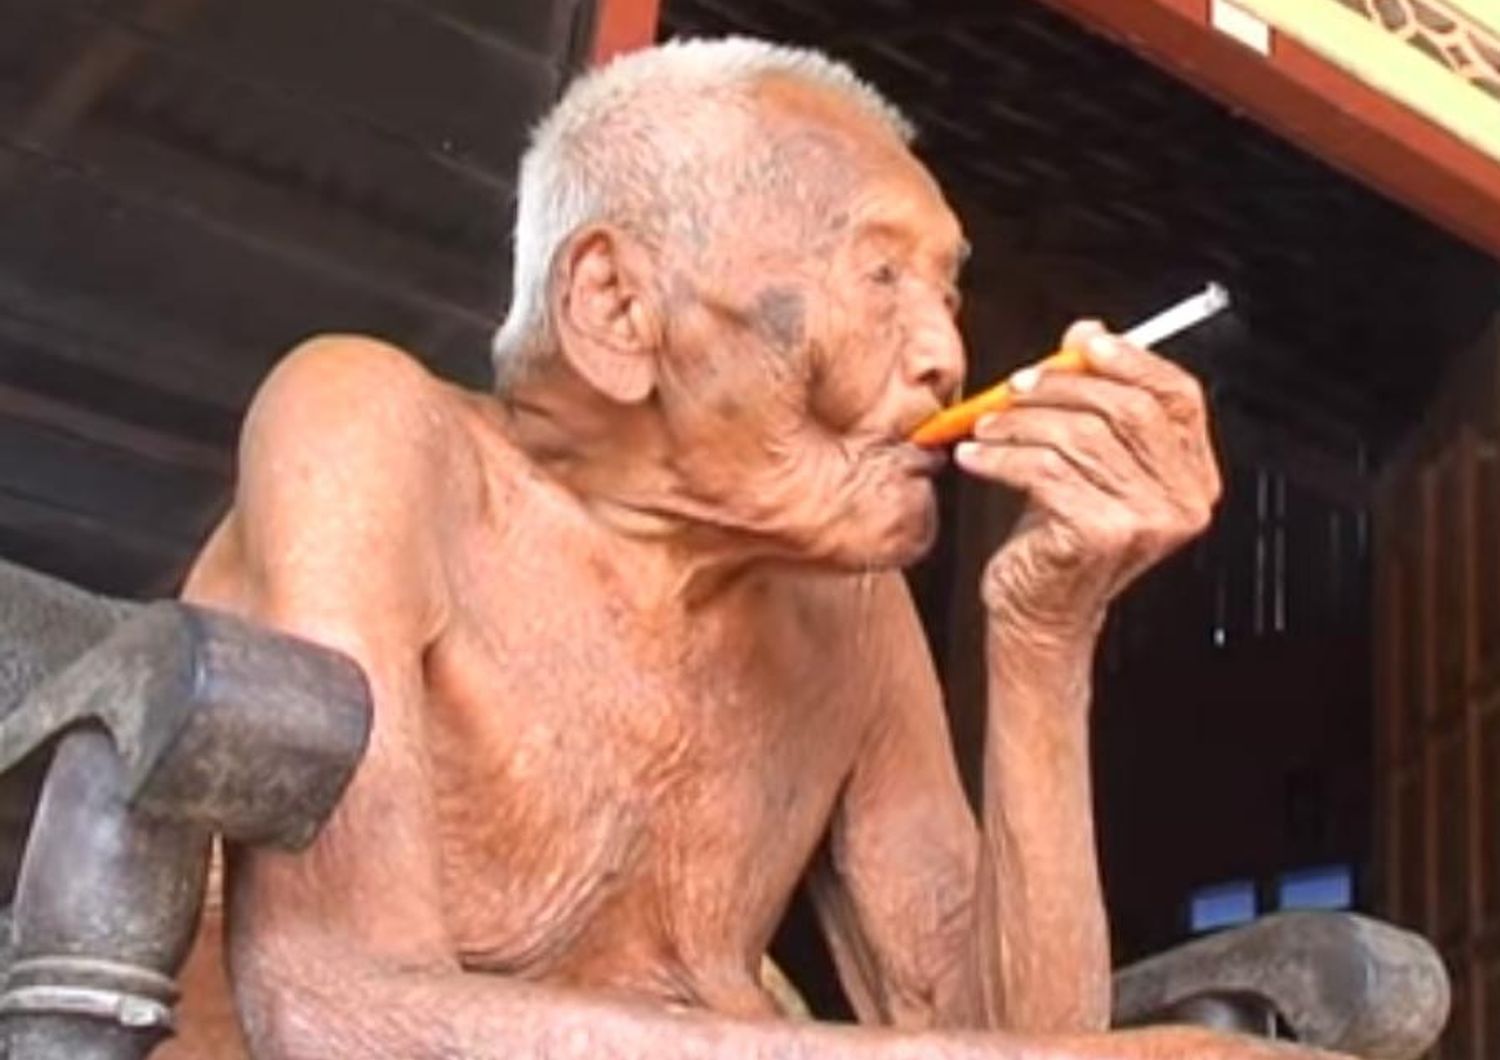 &nbsp;mbah gotho uomo pi&ugrave; vecchio morto a 146 anni indonesia